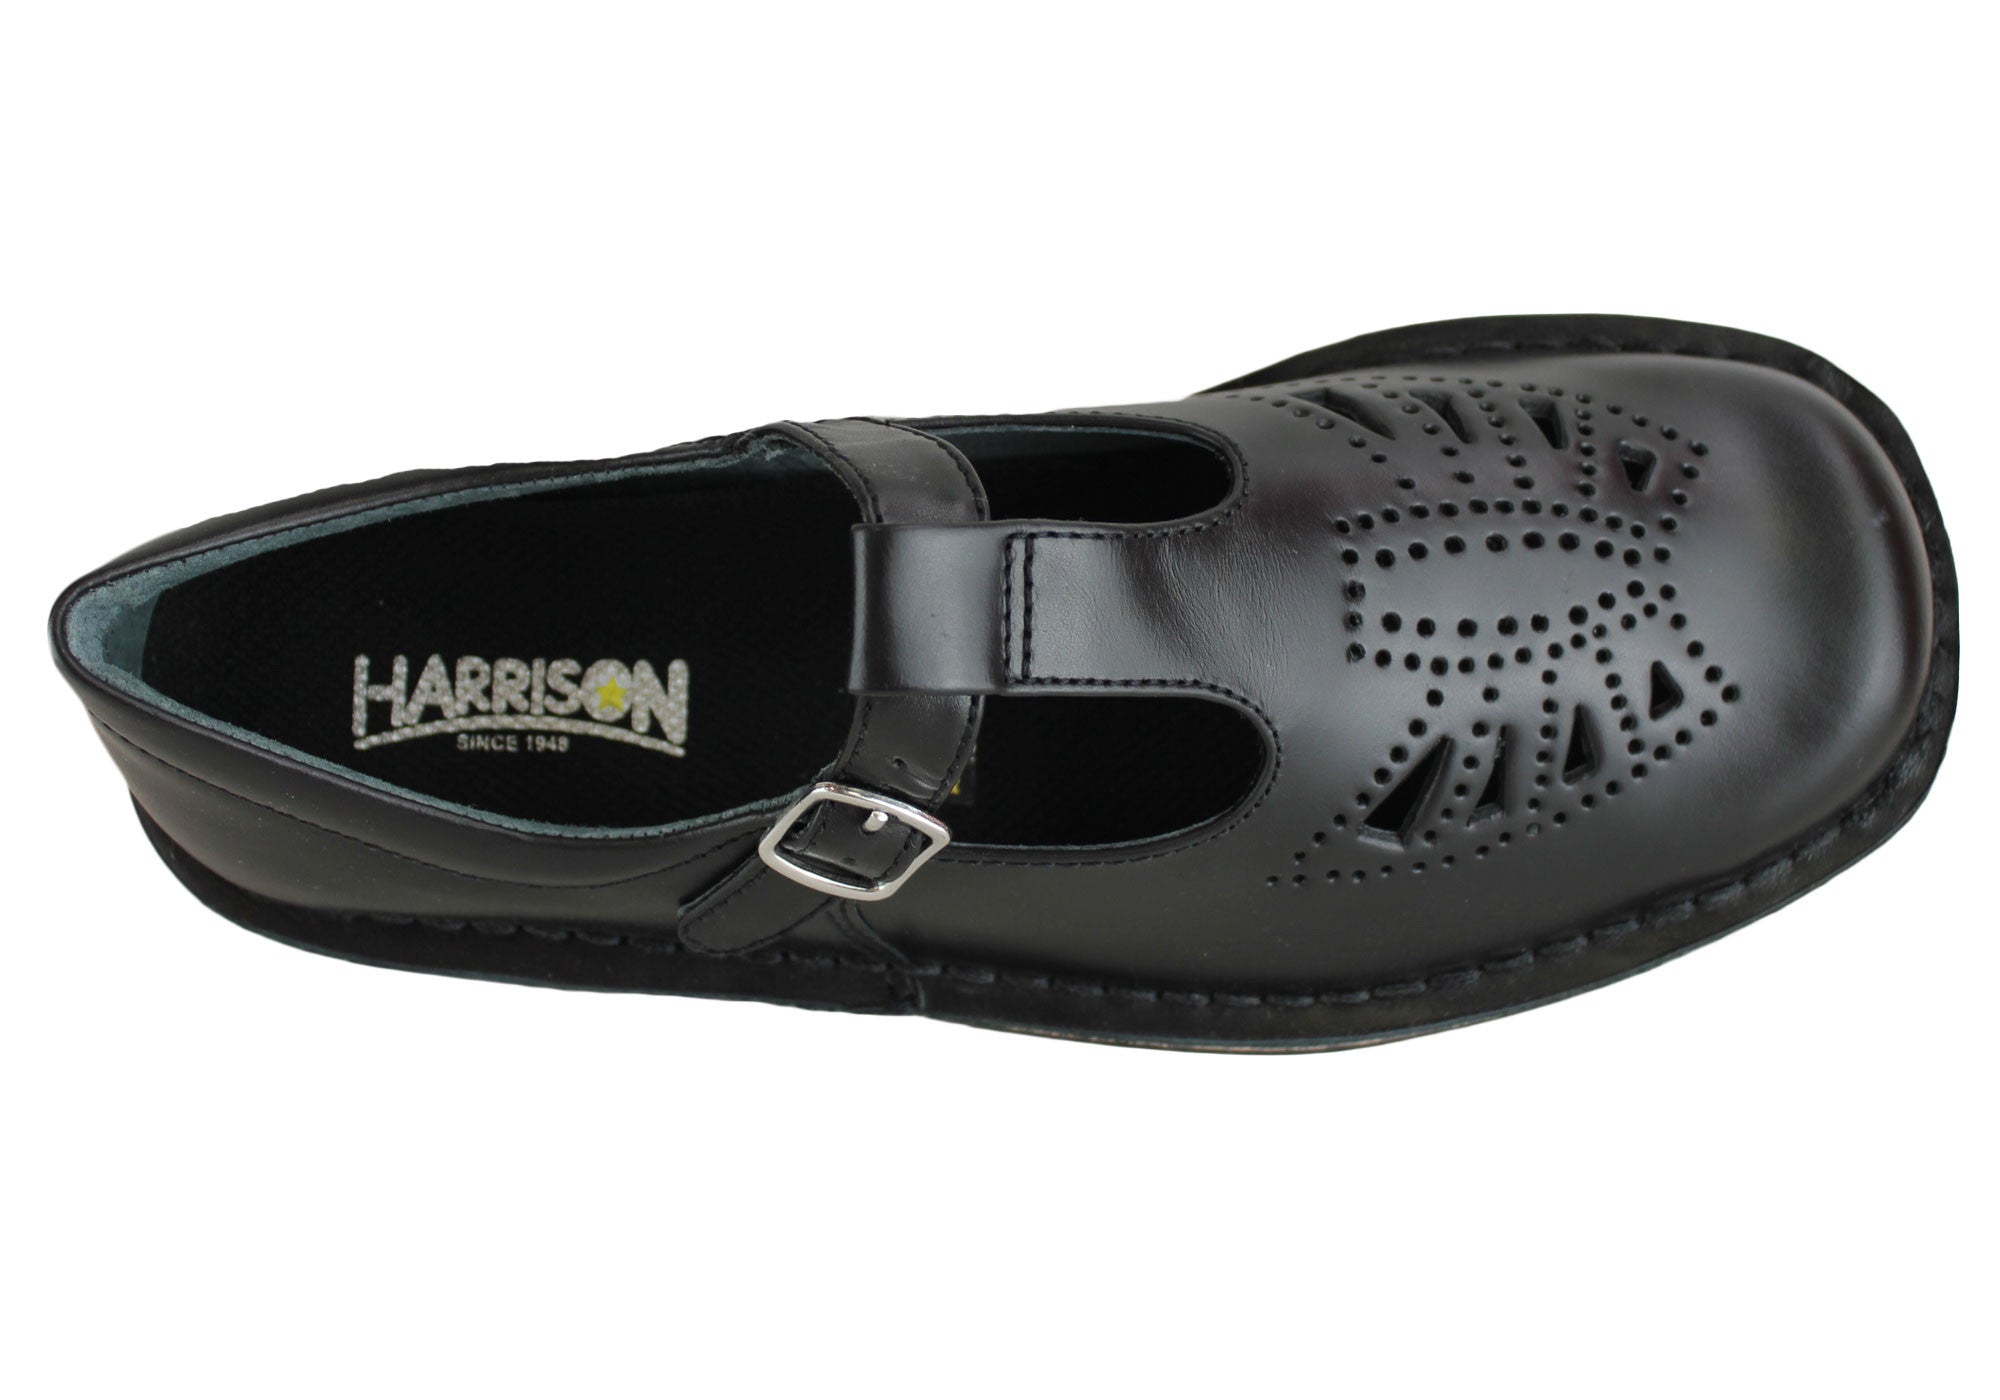 harrison shoes australia